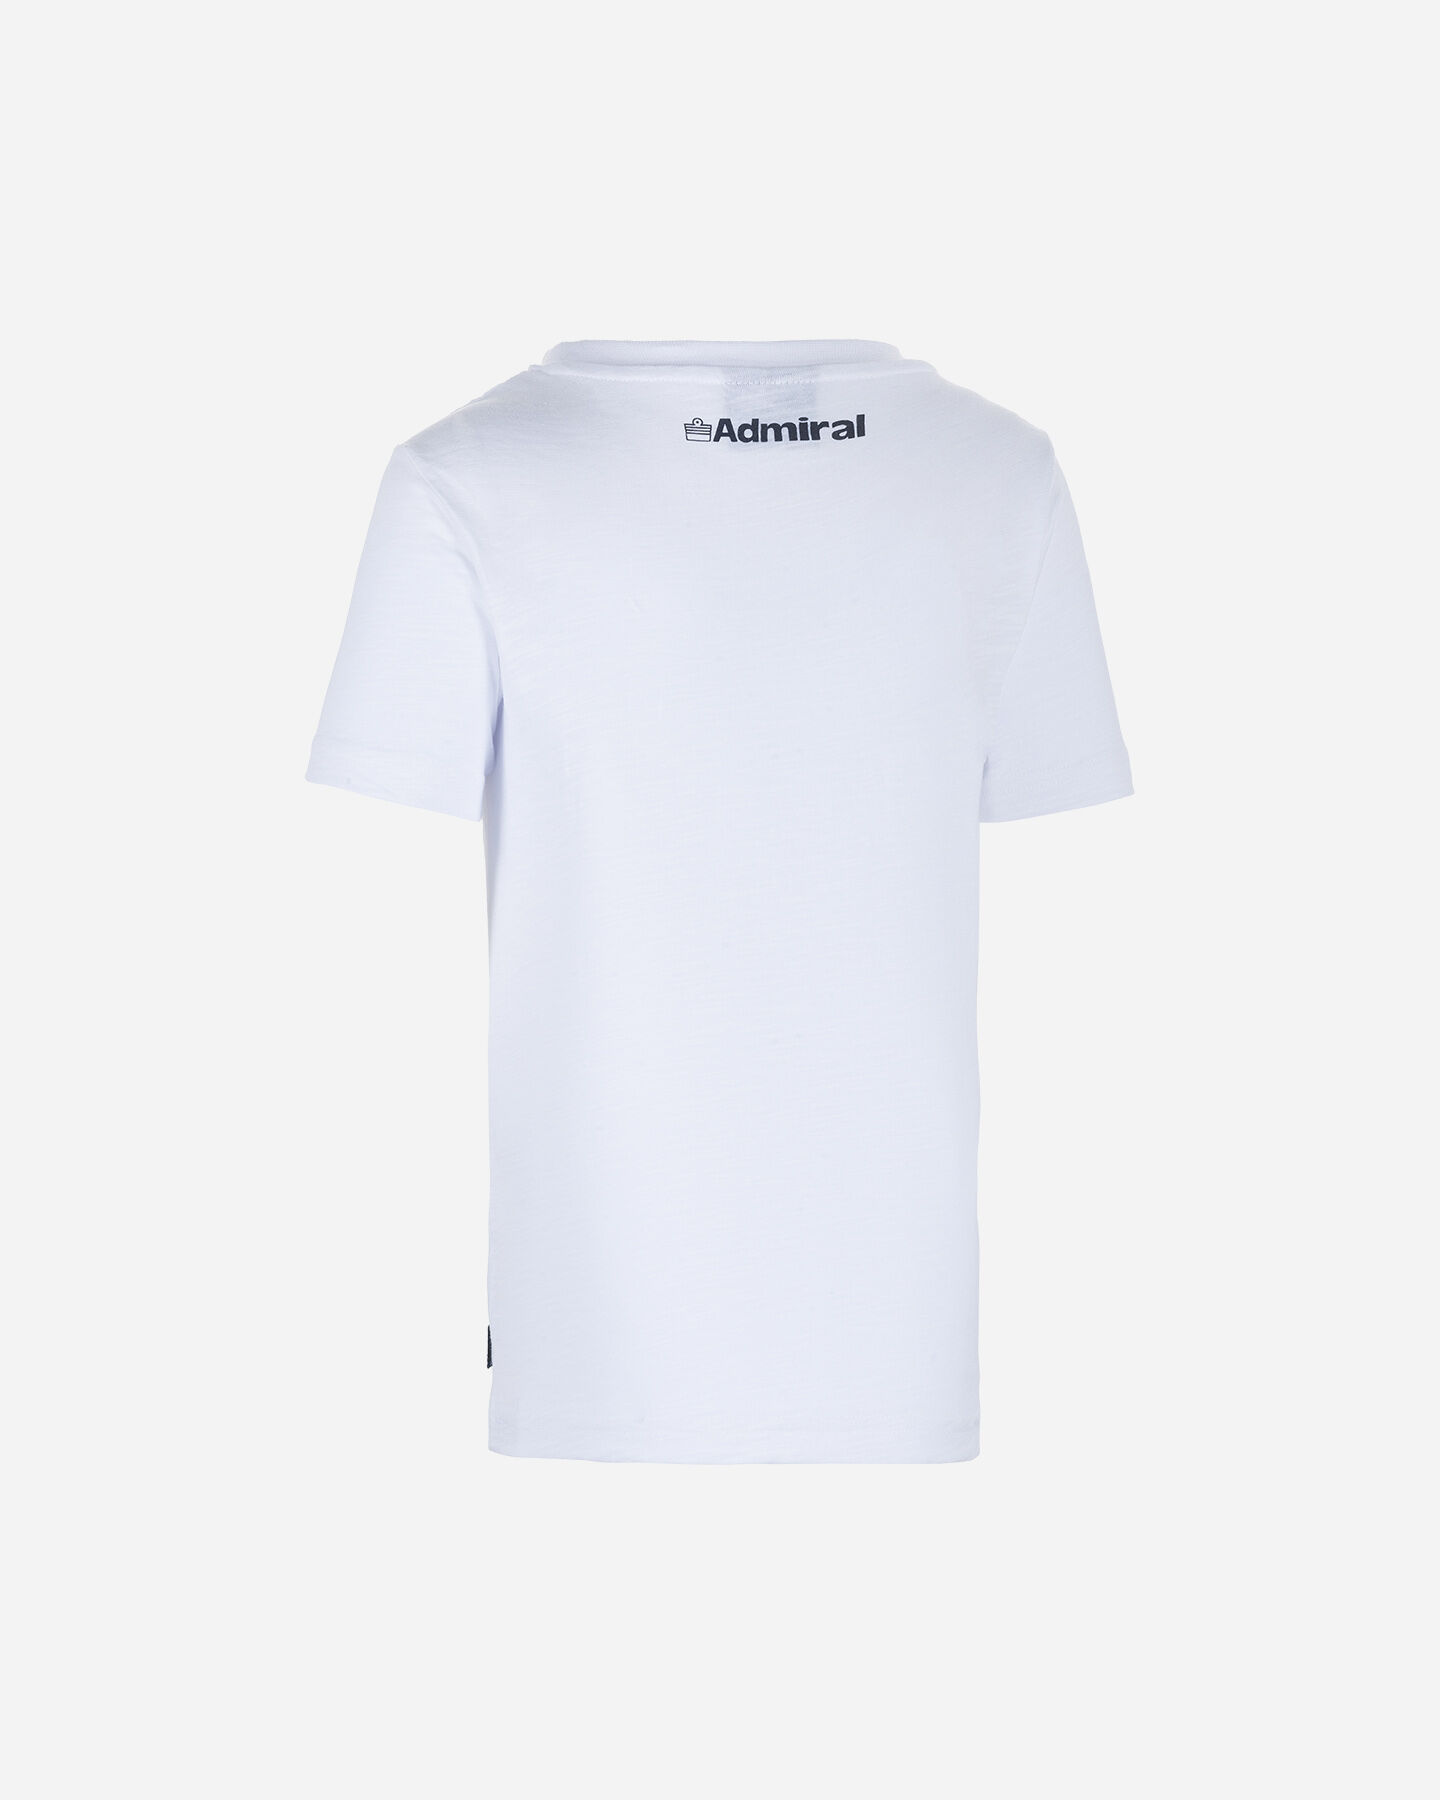  T-Shirt ADMIRAL SPRAY RAINBOW JR S4075952|001|6A scatto 1